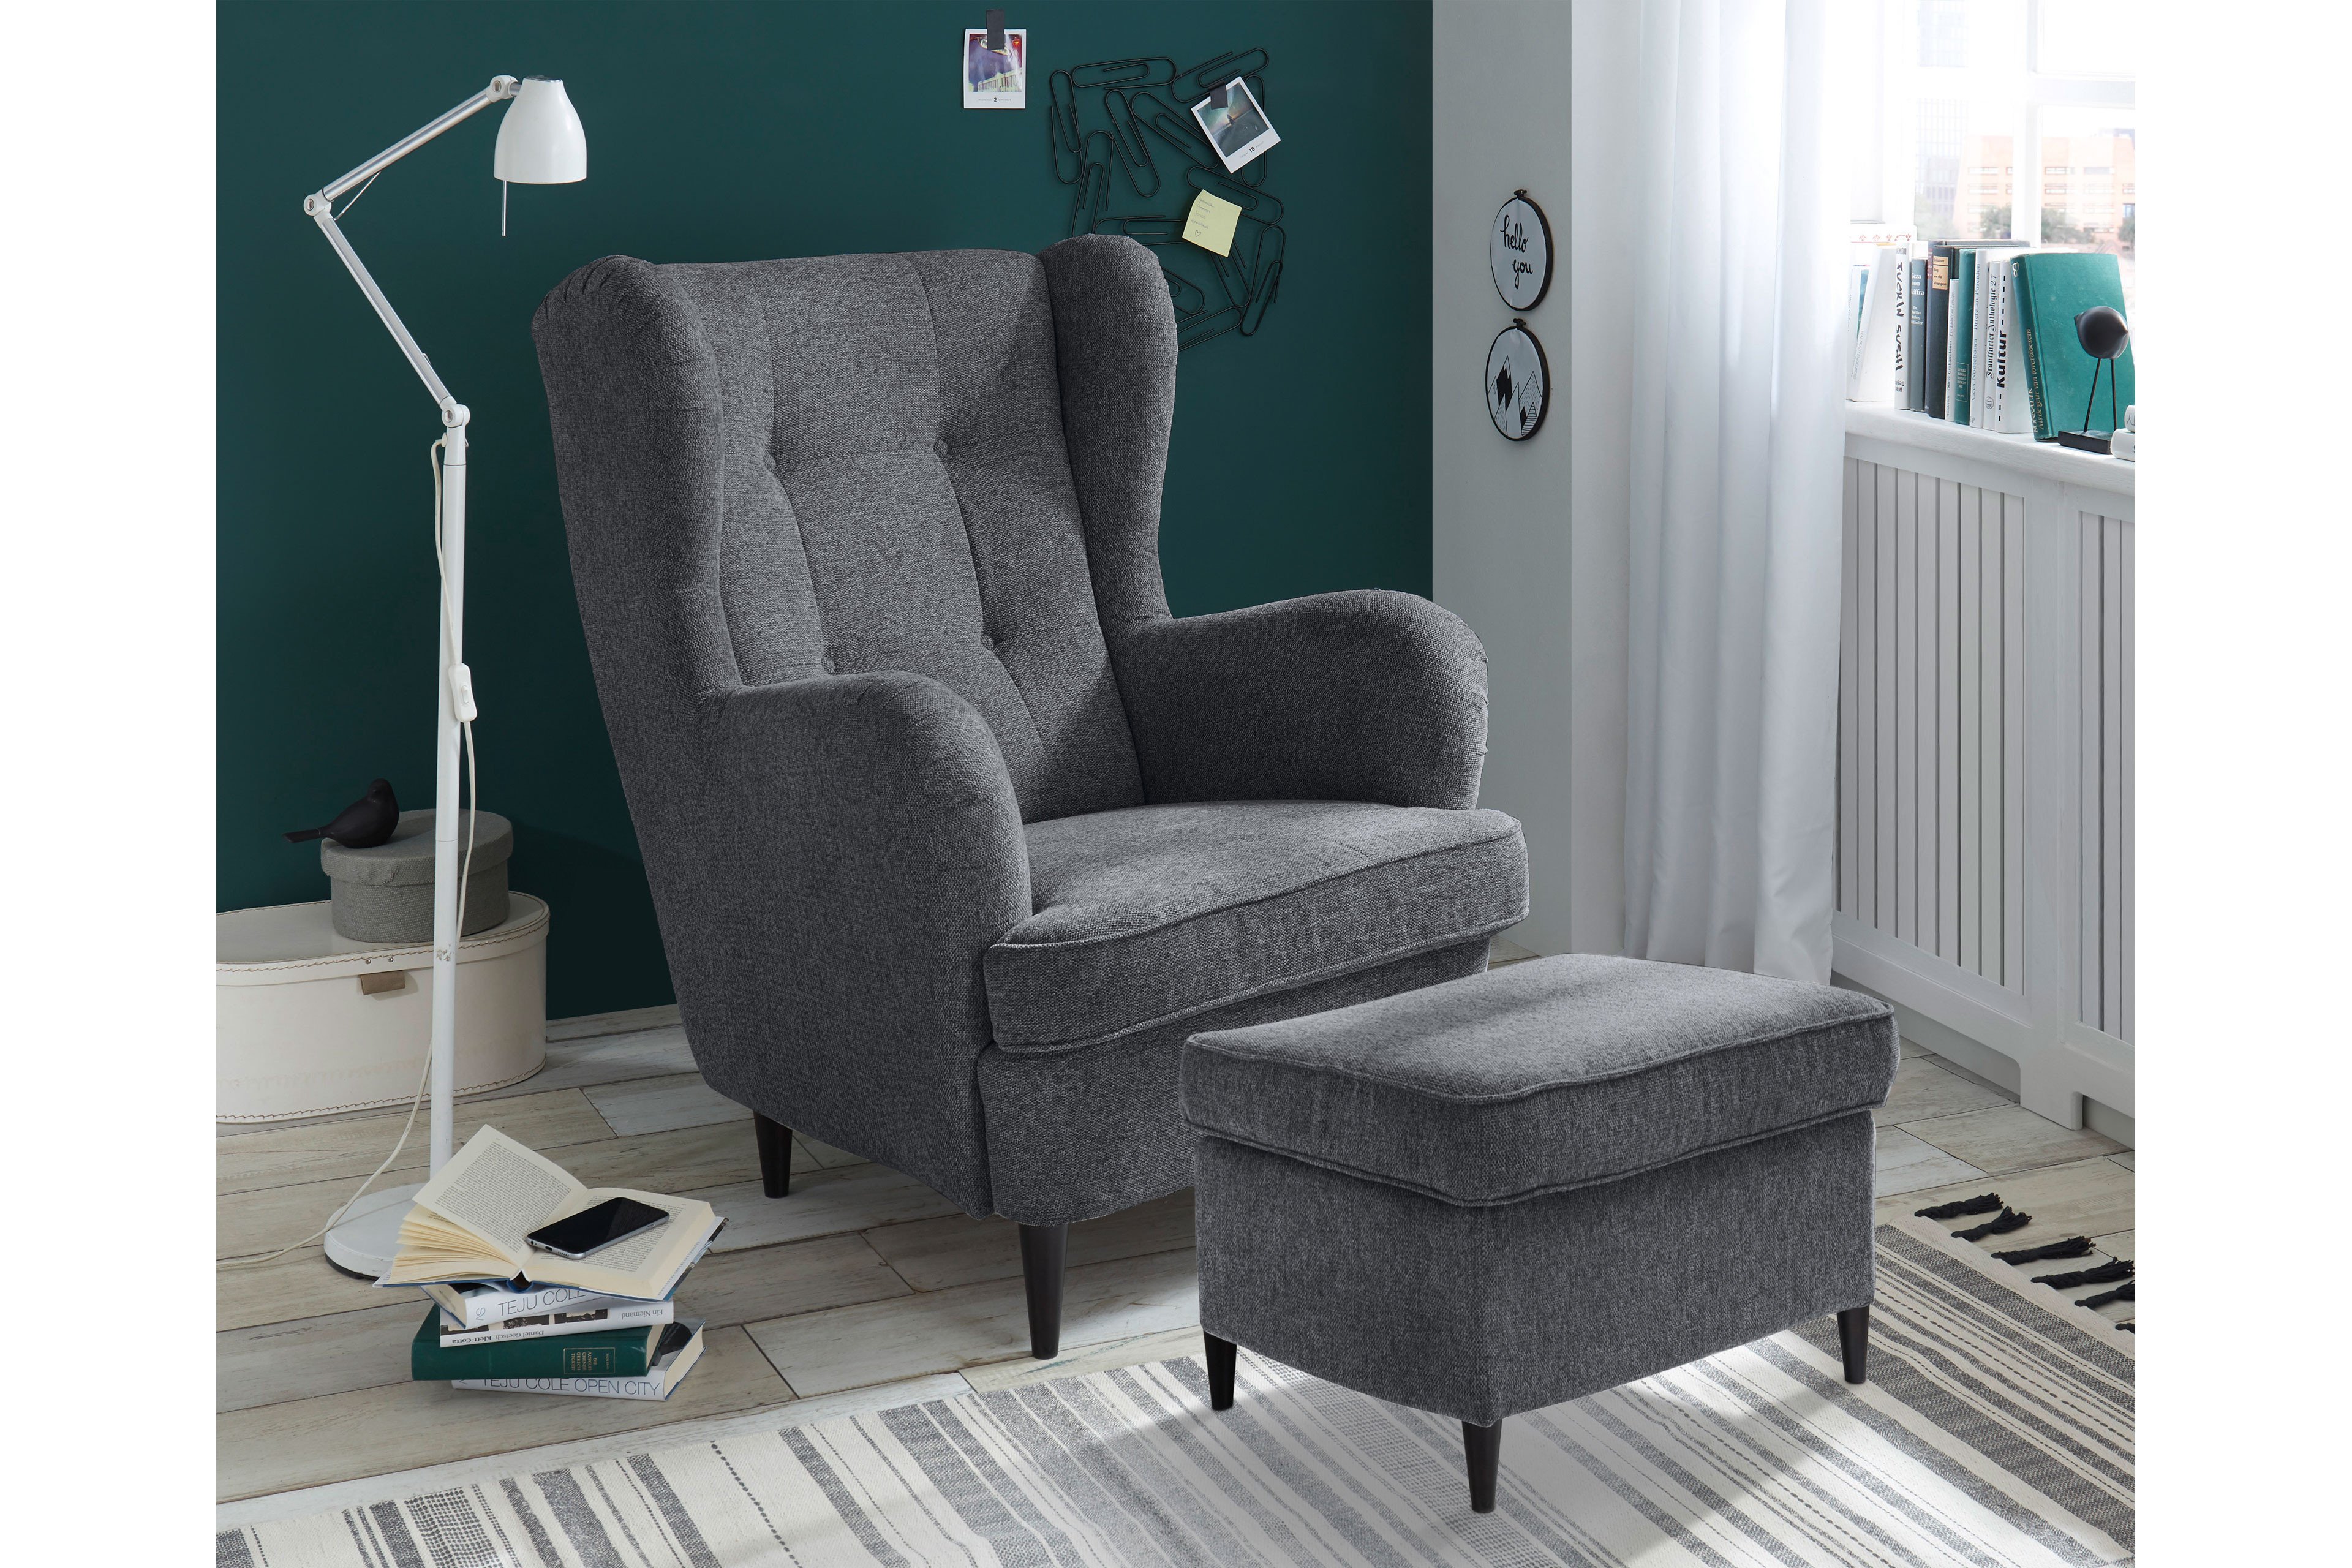 ED-Lifestyle Osbert Sessel dunkelgrau | Möbel Letz - Ihr Online-Shop